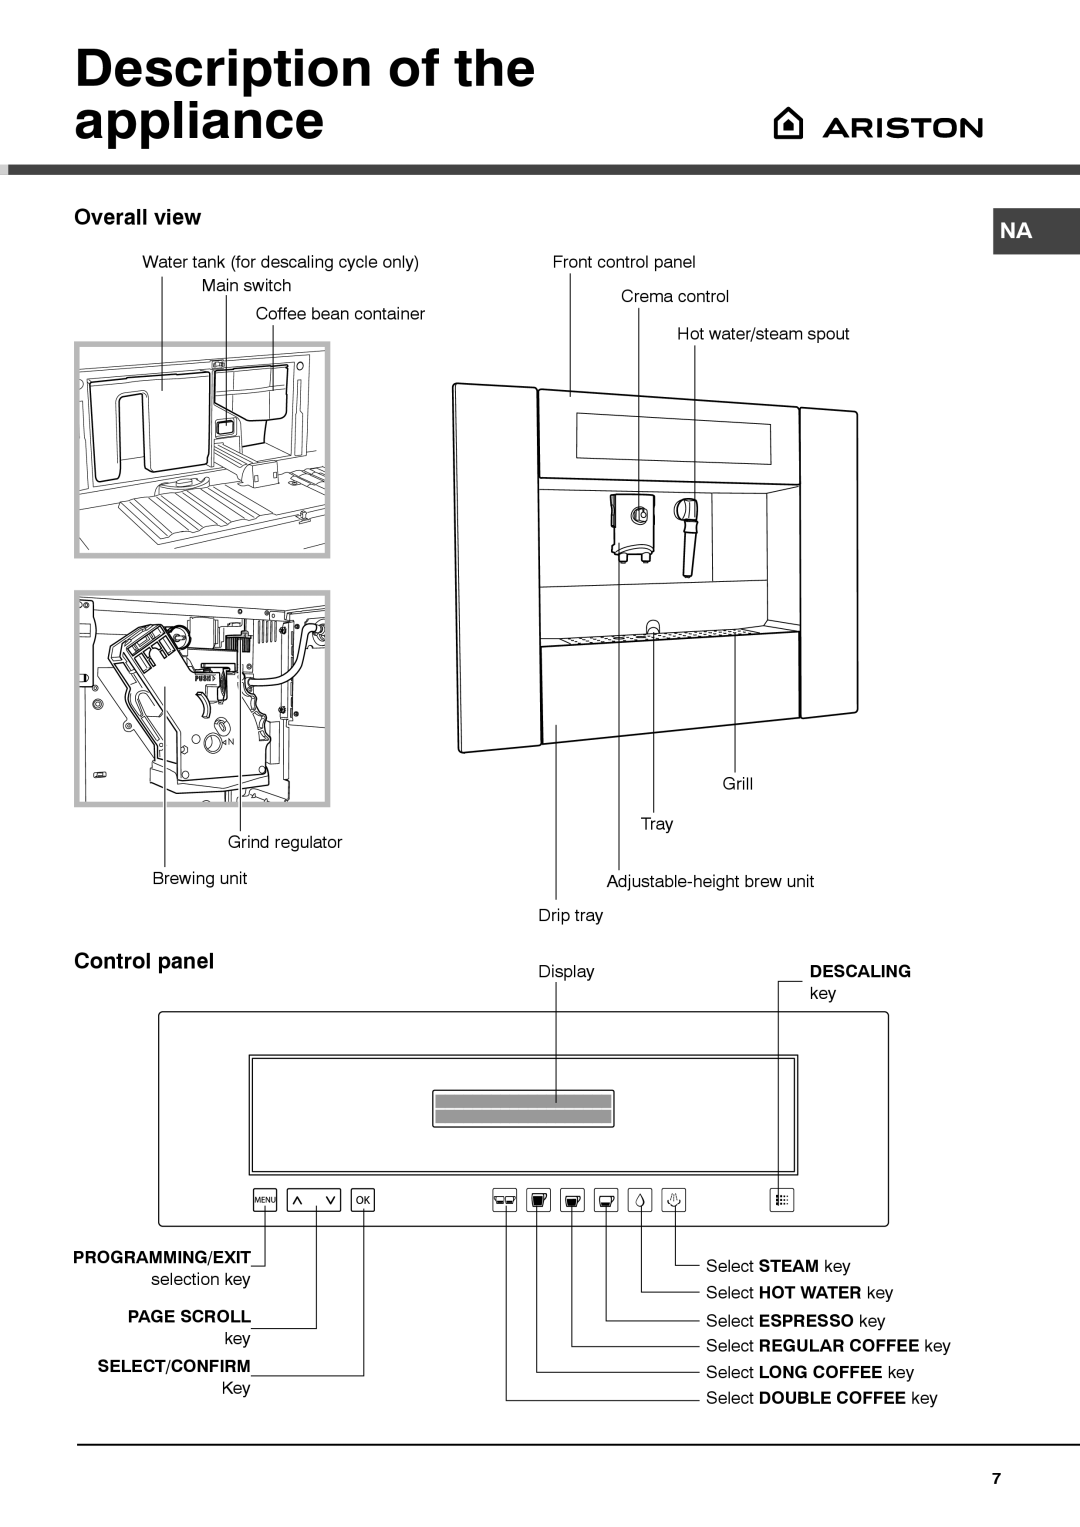 Ariston MCA15NAP manual Description of the appliance, Overall view, Control panel 